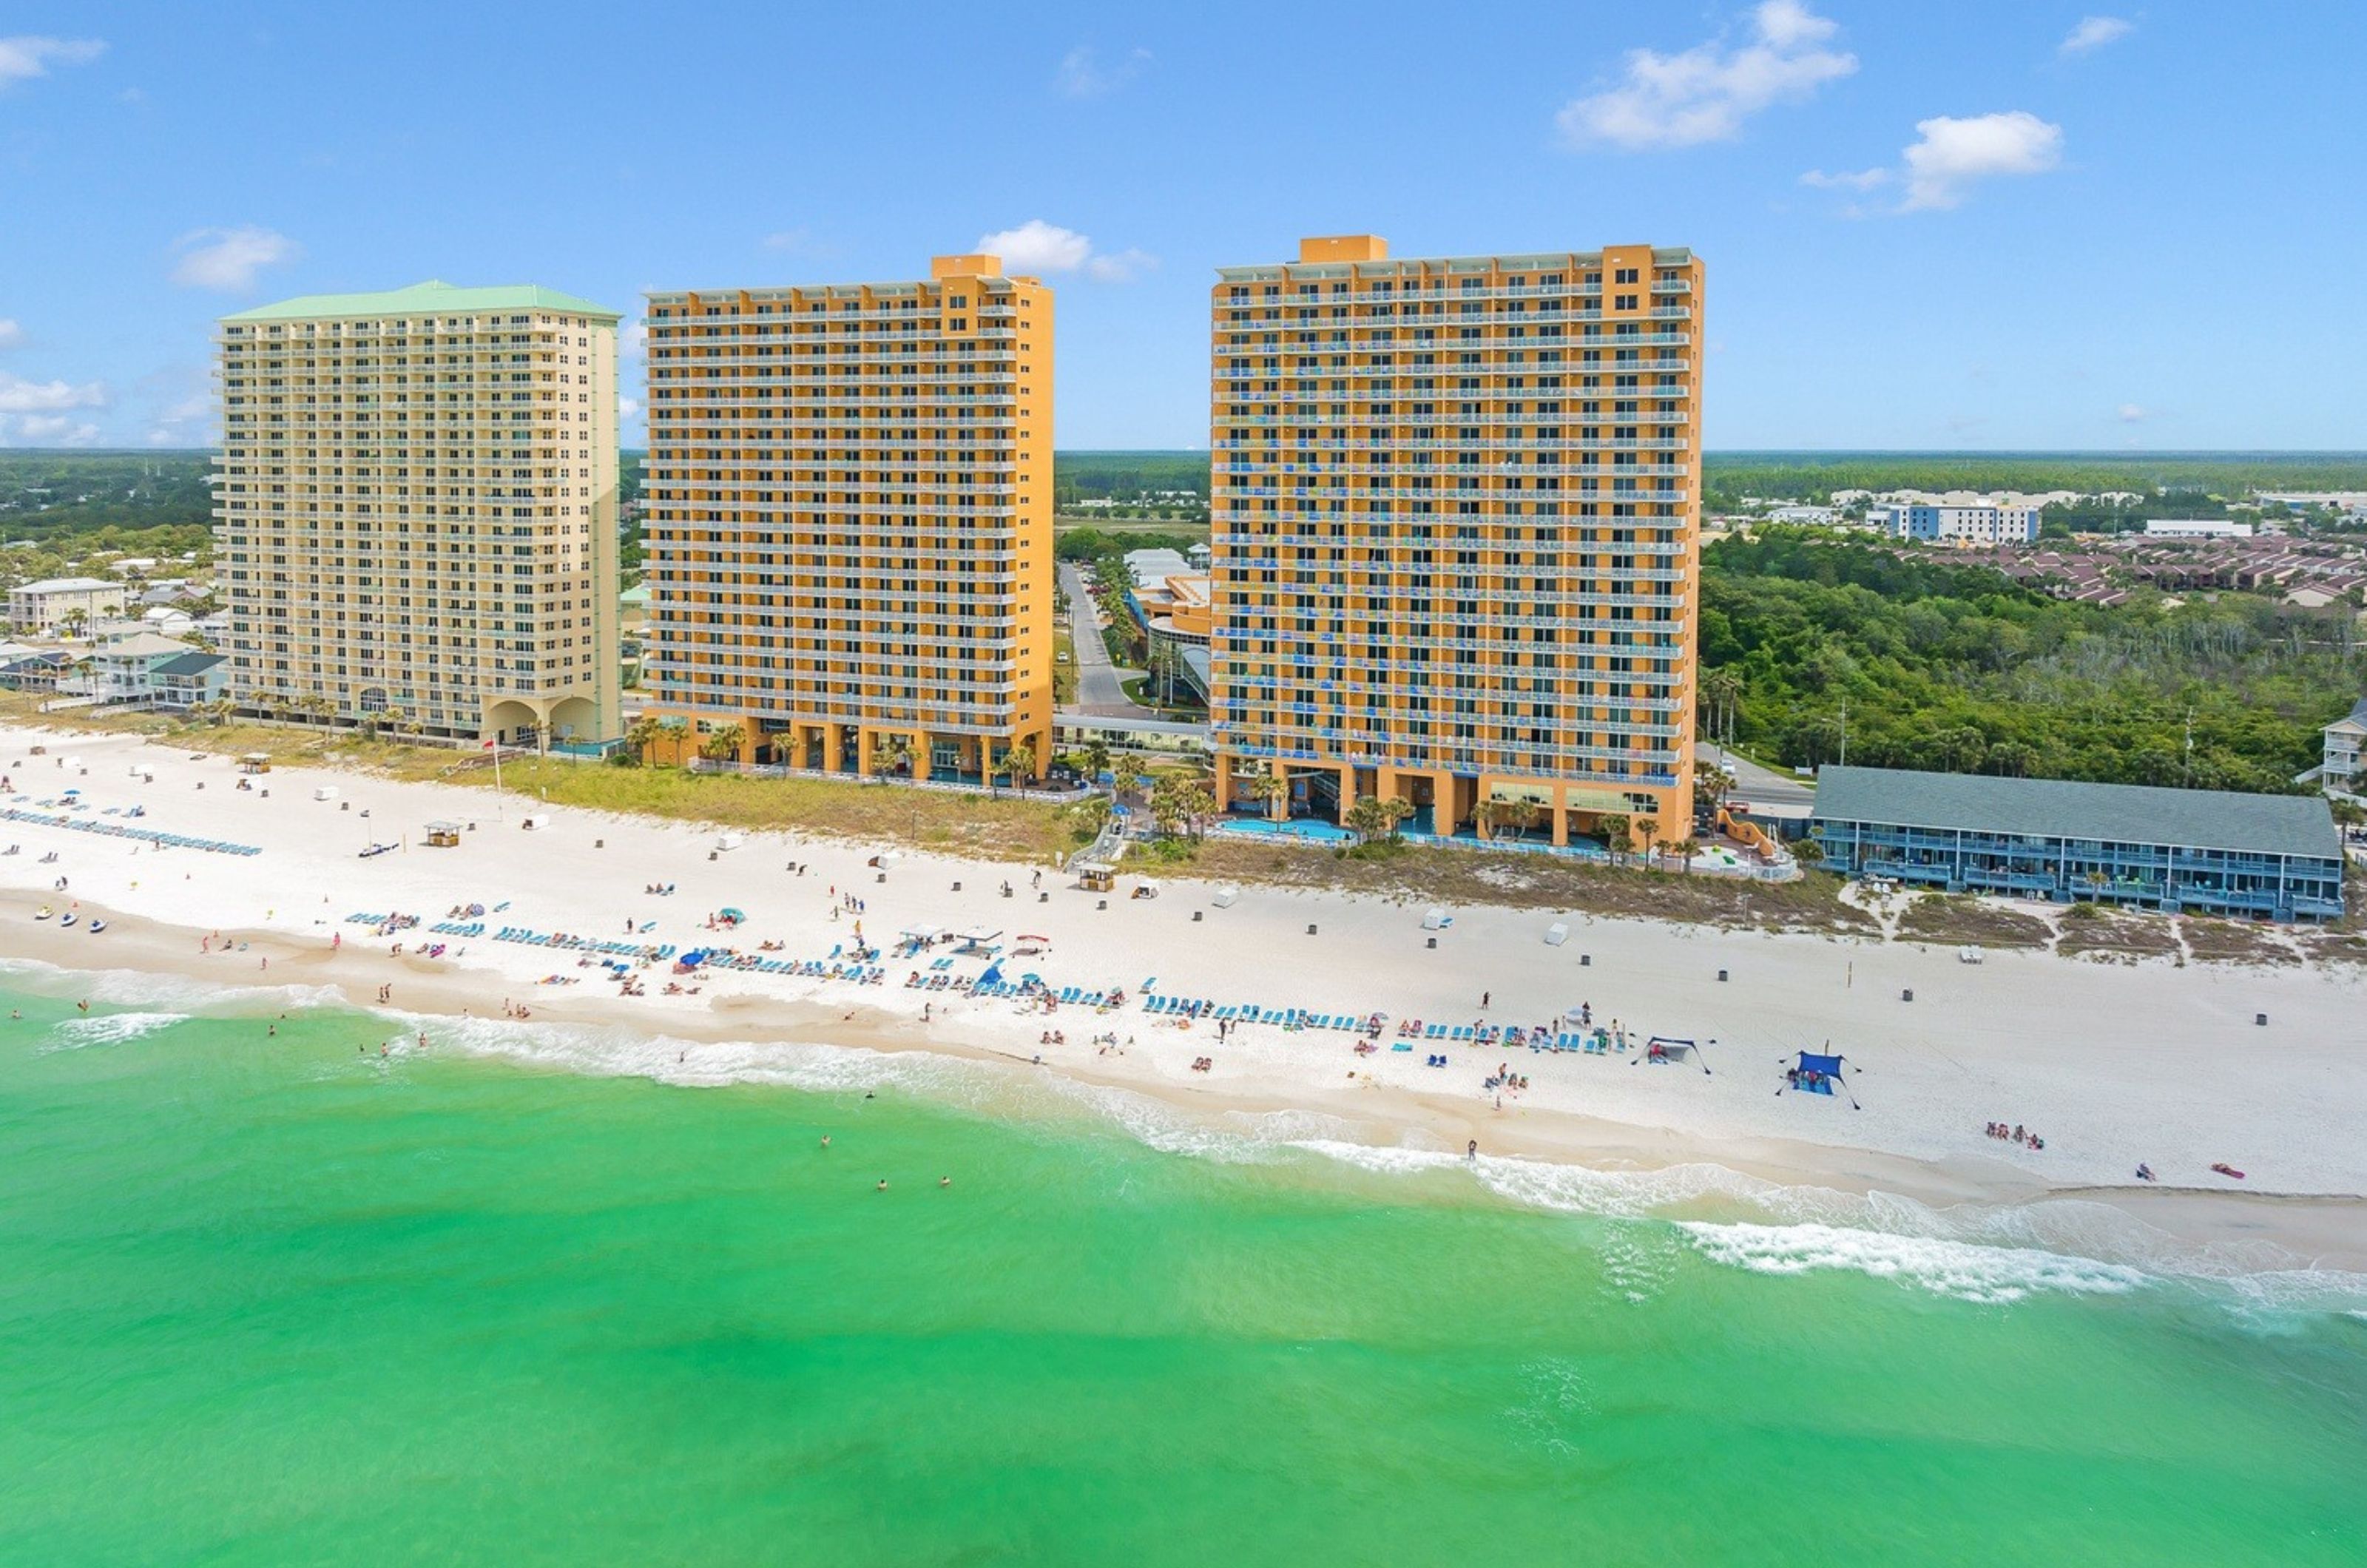 Aerial view from the ocean of Splash Resort in Panama City Beach Florida 